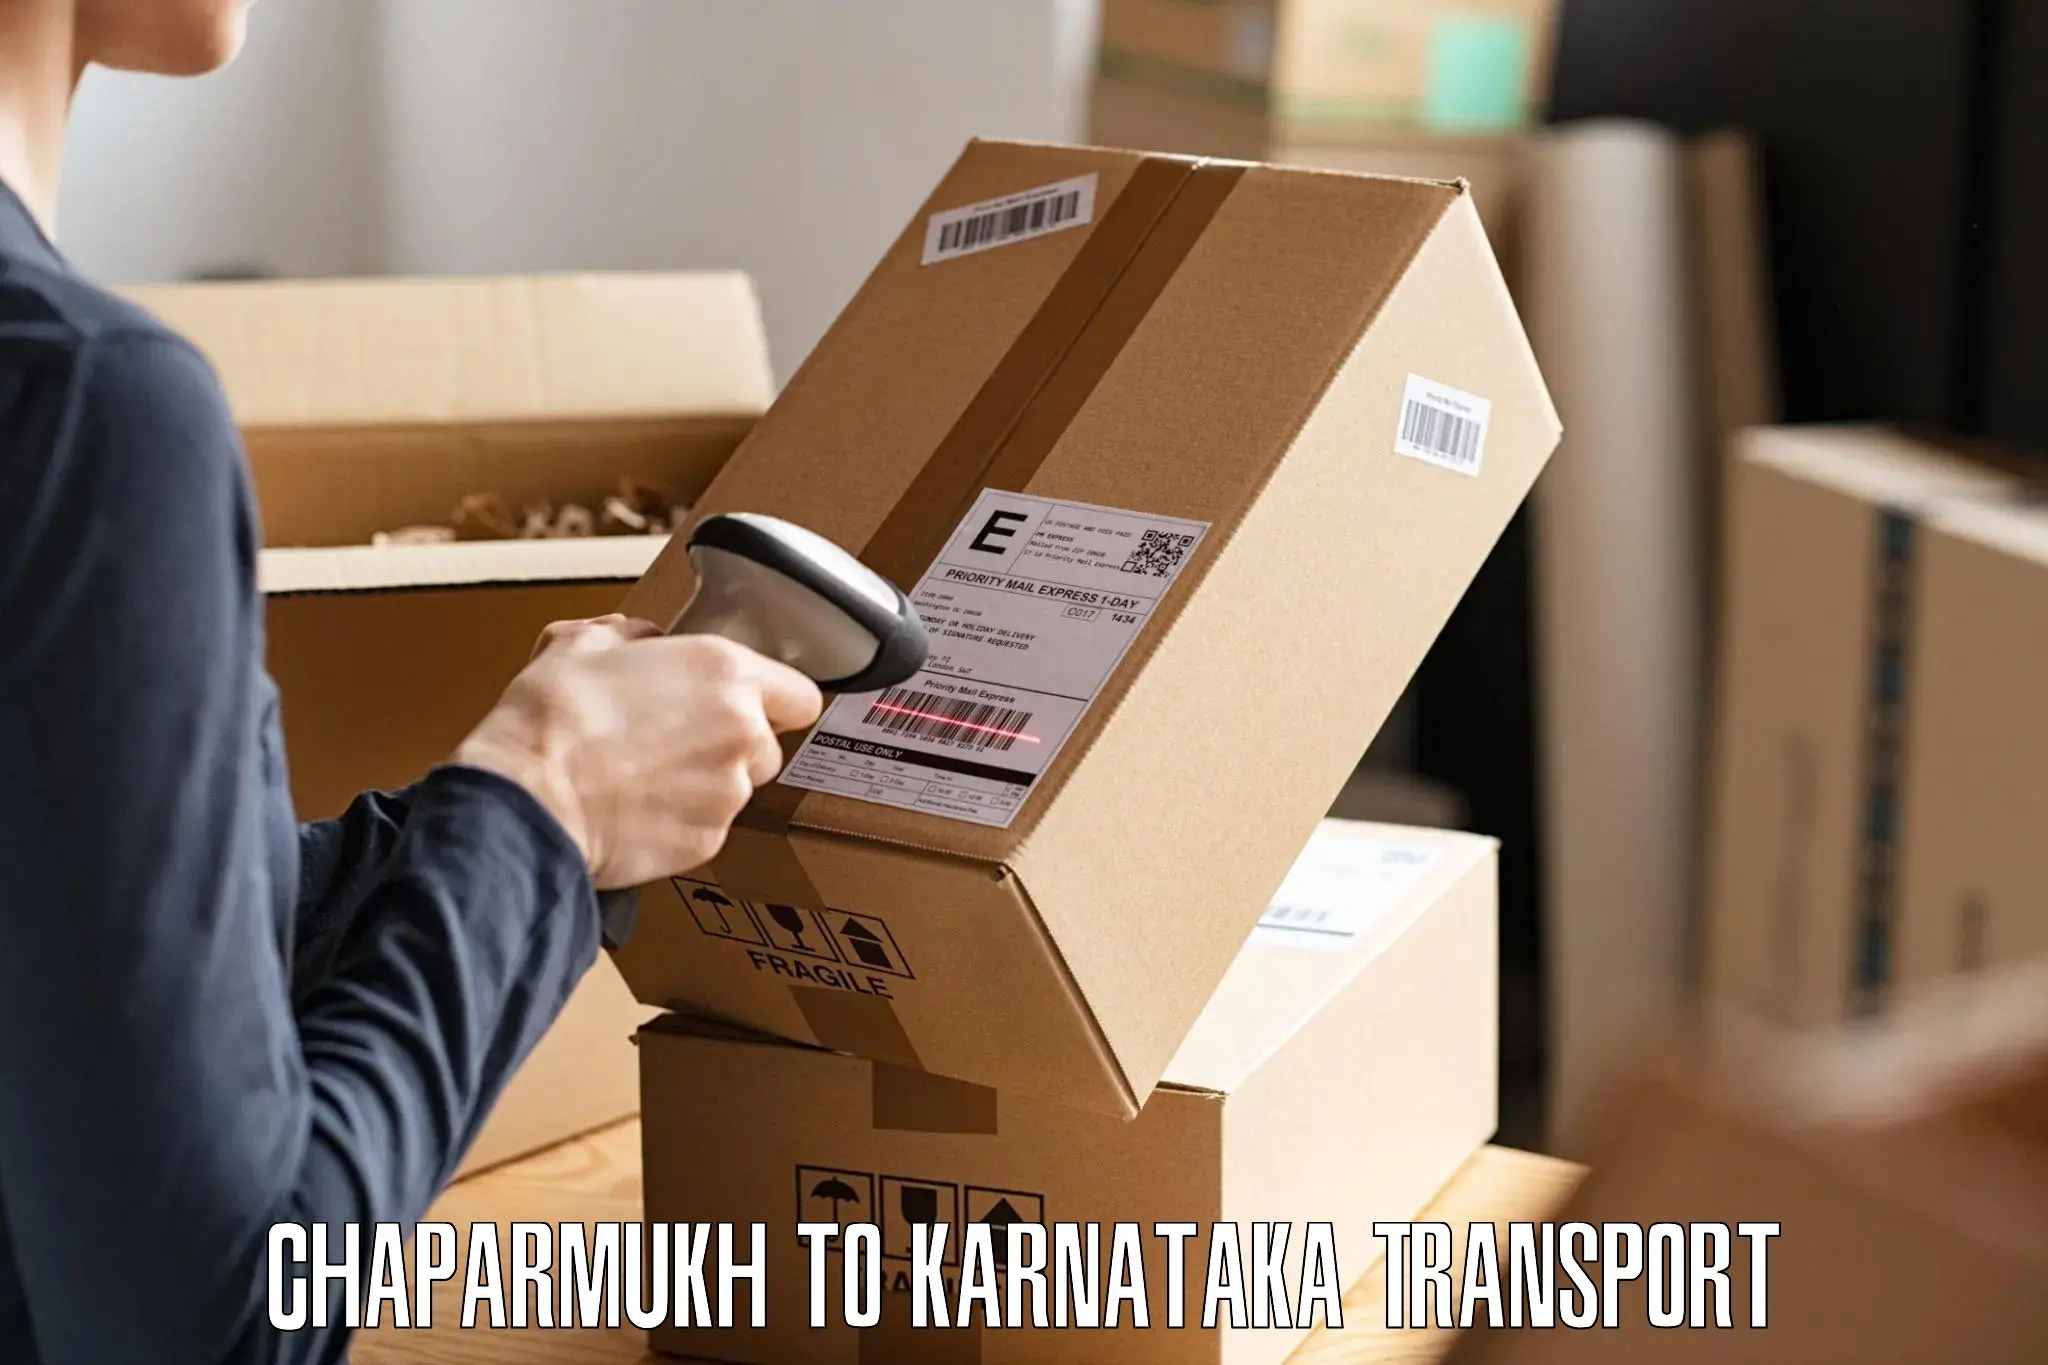 Goods delivery service Chaparmukh to Ballari